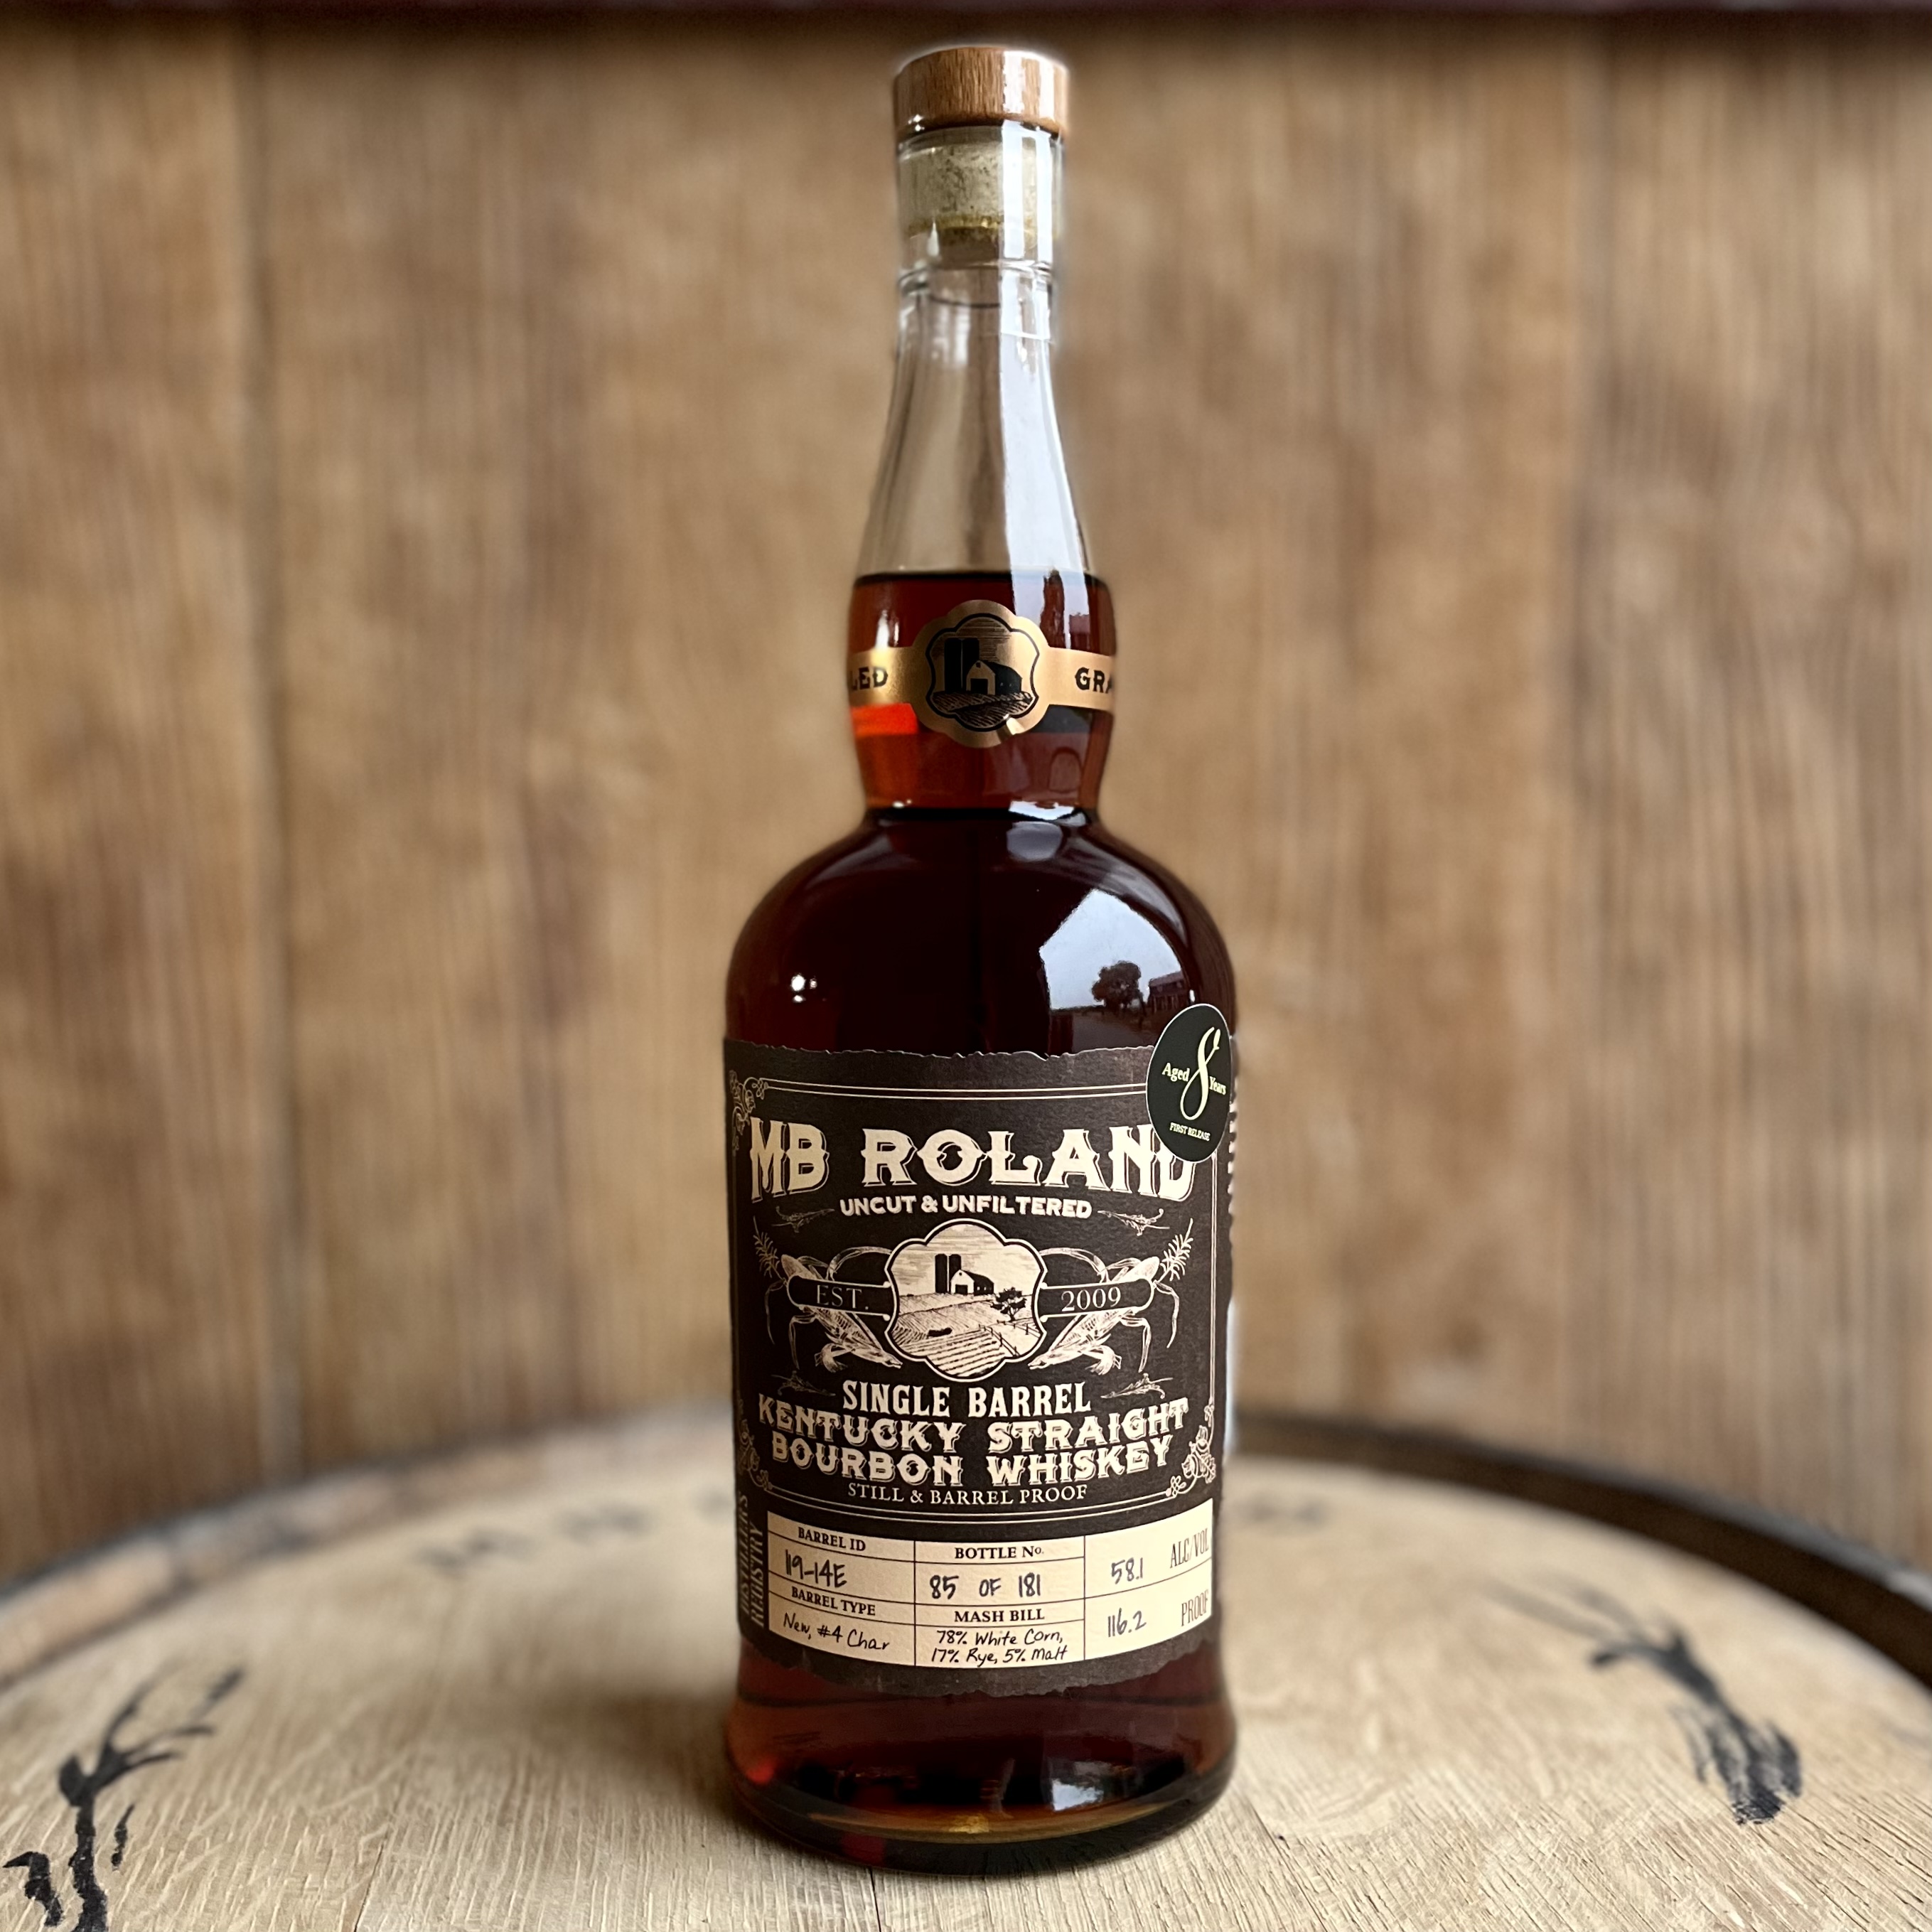 Single Barrel Kentucky Straight Bourbon Whiskey - Aged 8 Years